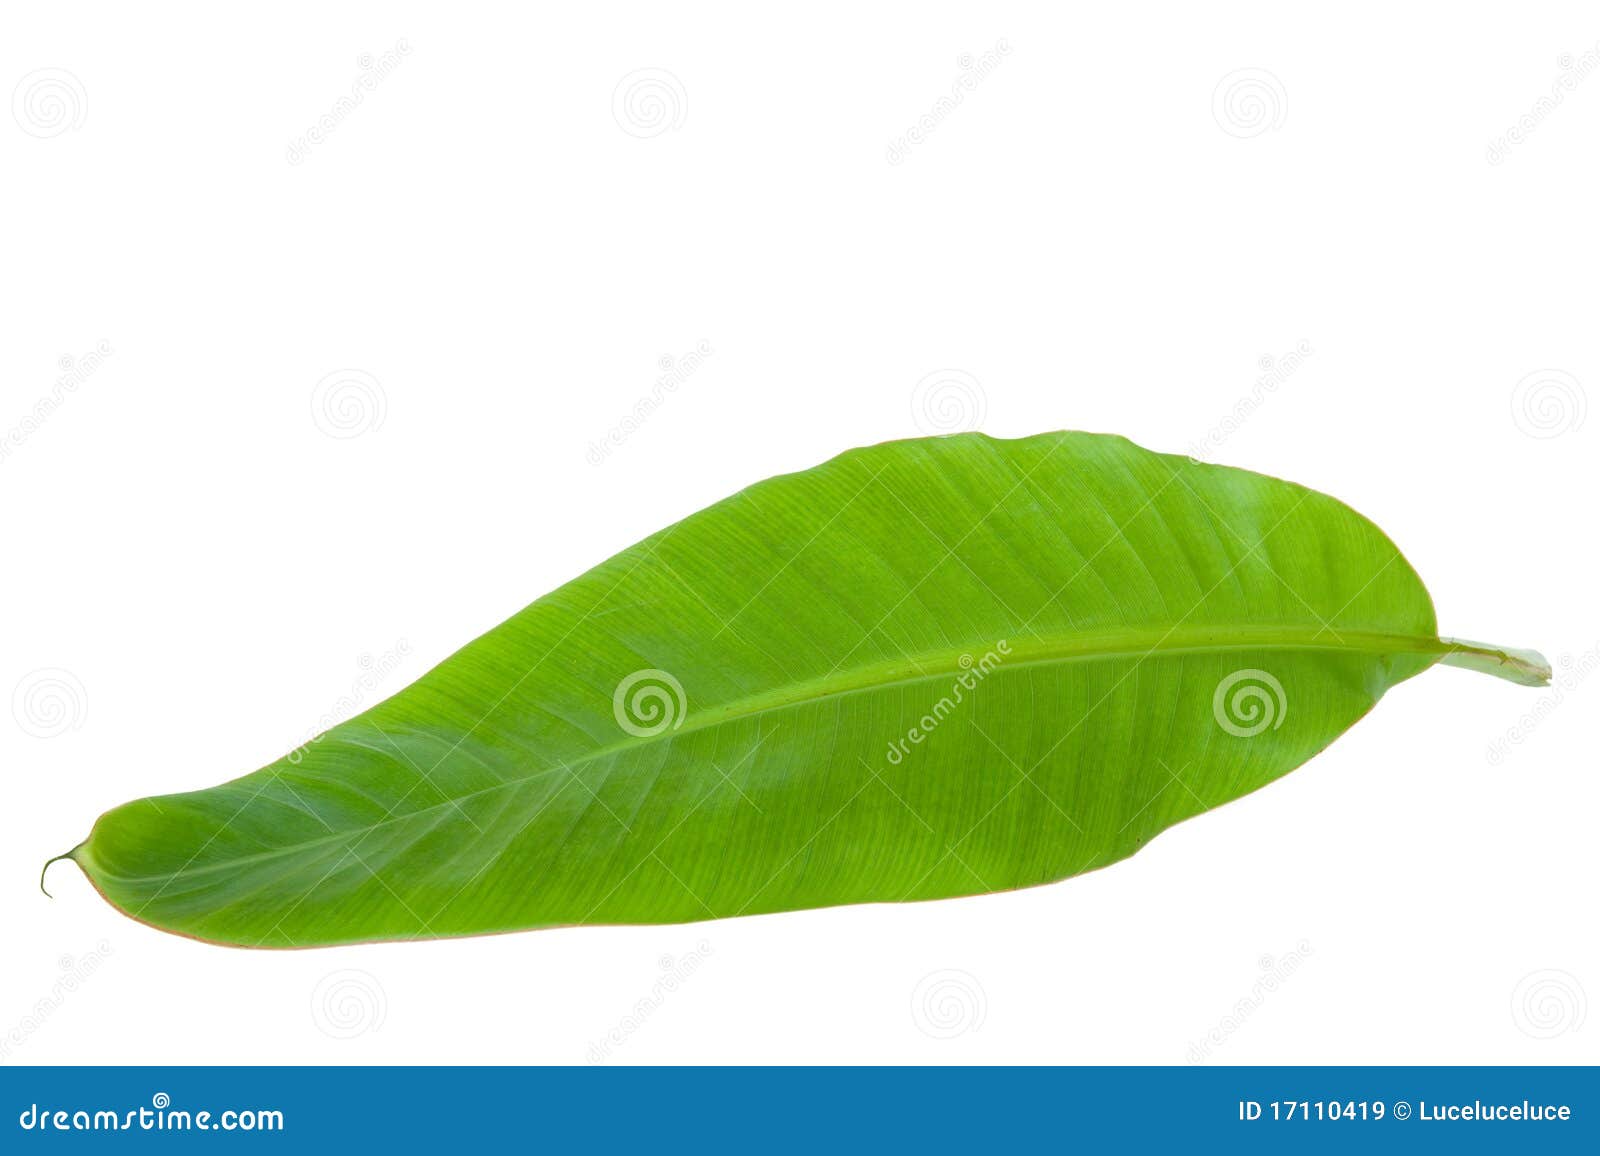 clip art banana leaf - photo #42